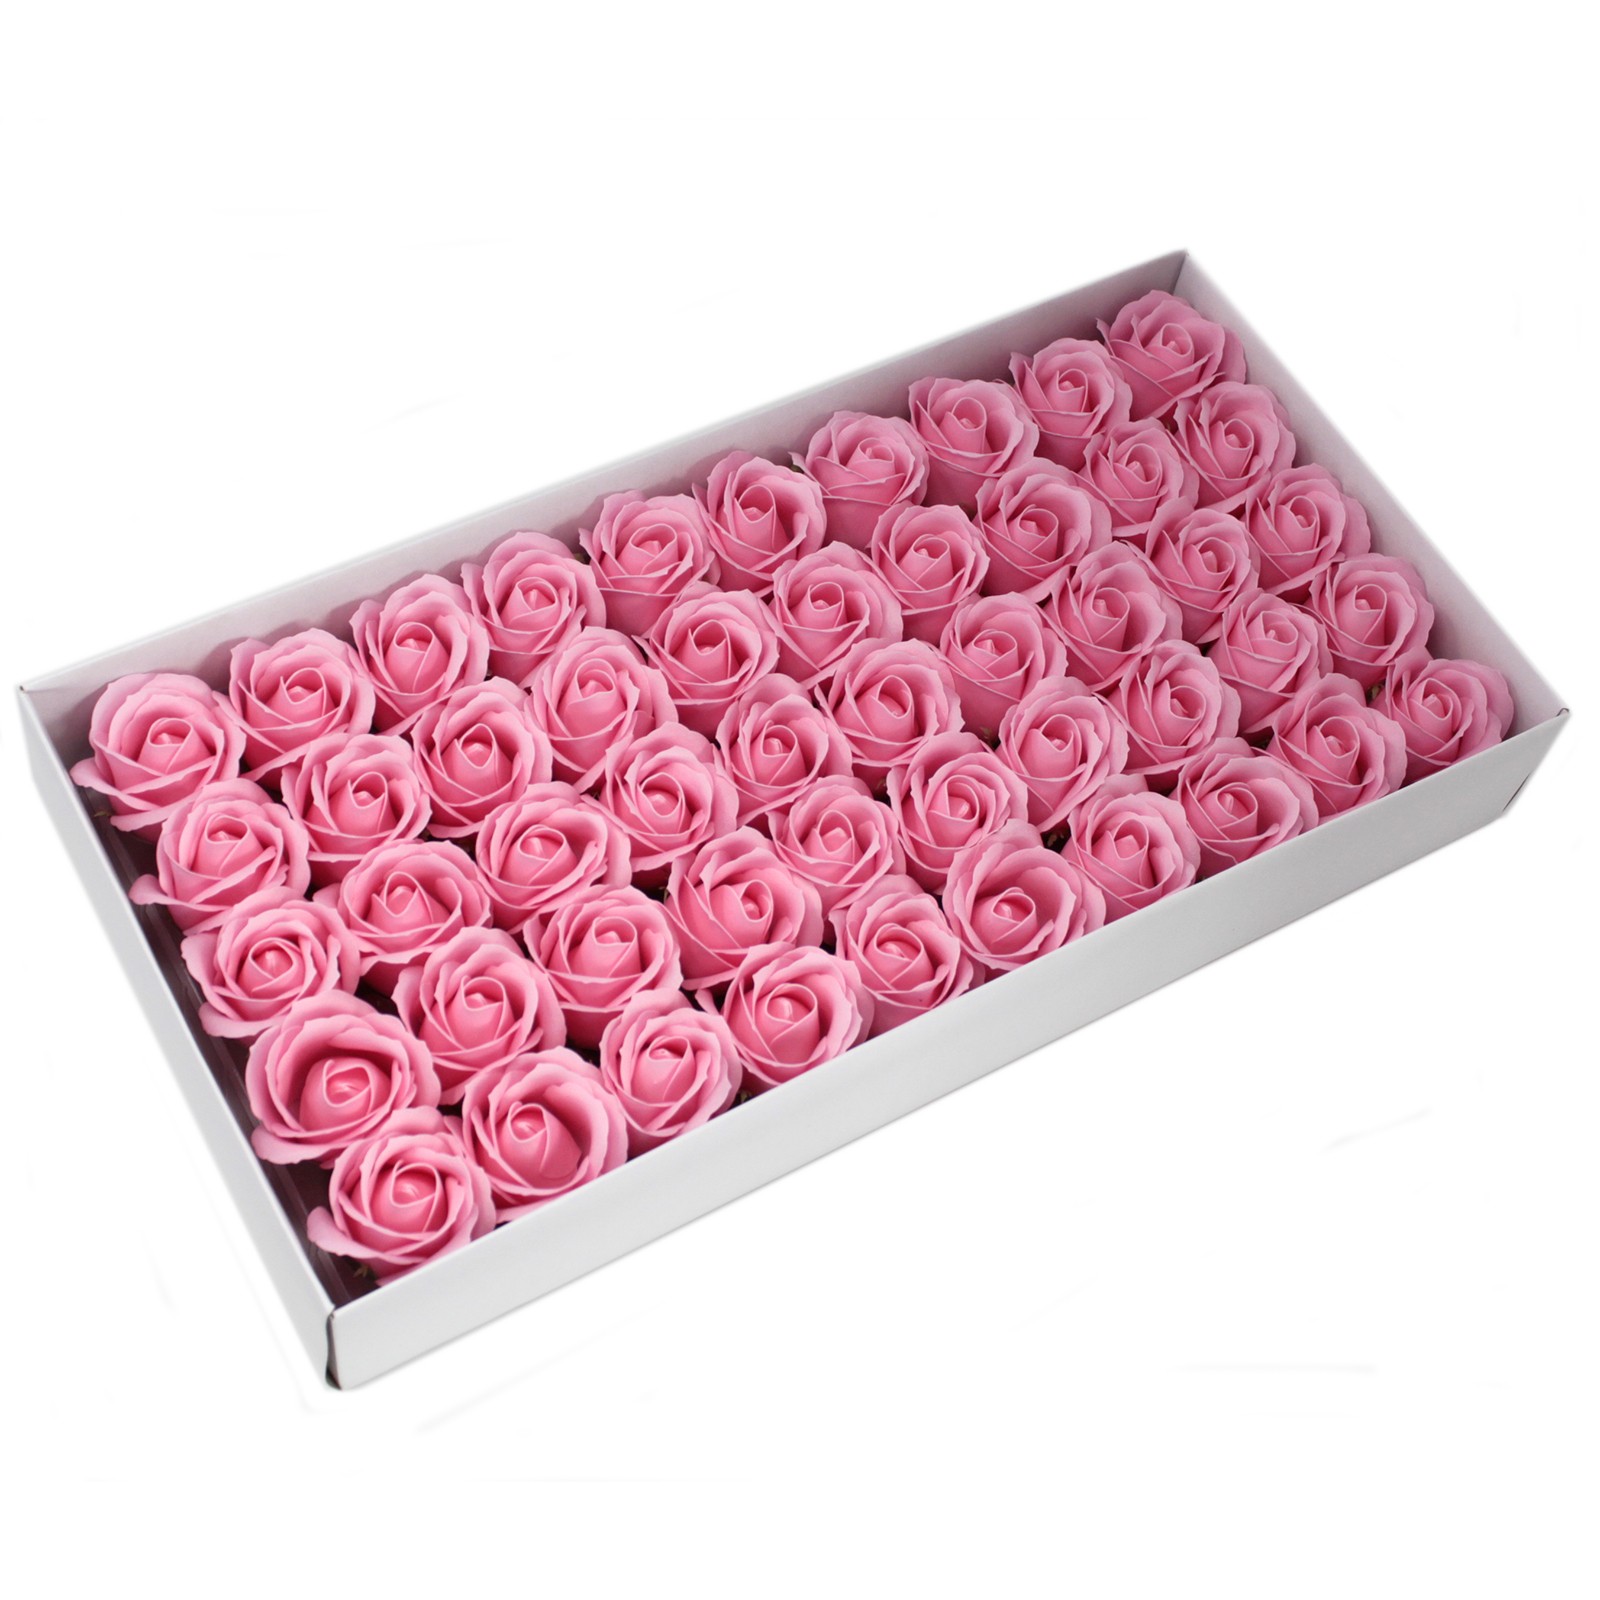 10 x Craft Soap Flowers - Med Rose - Blush